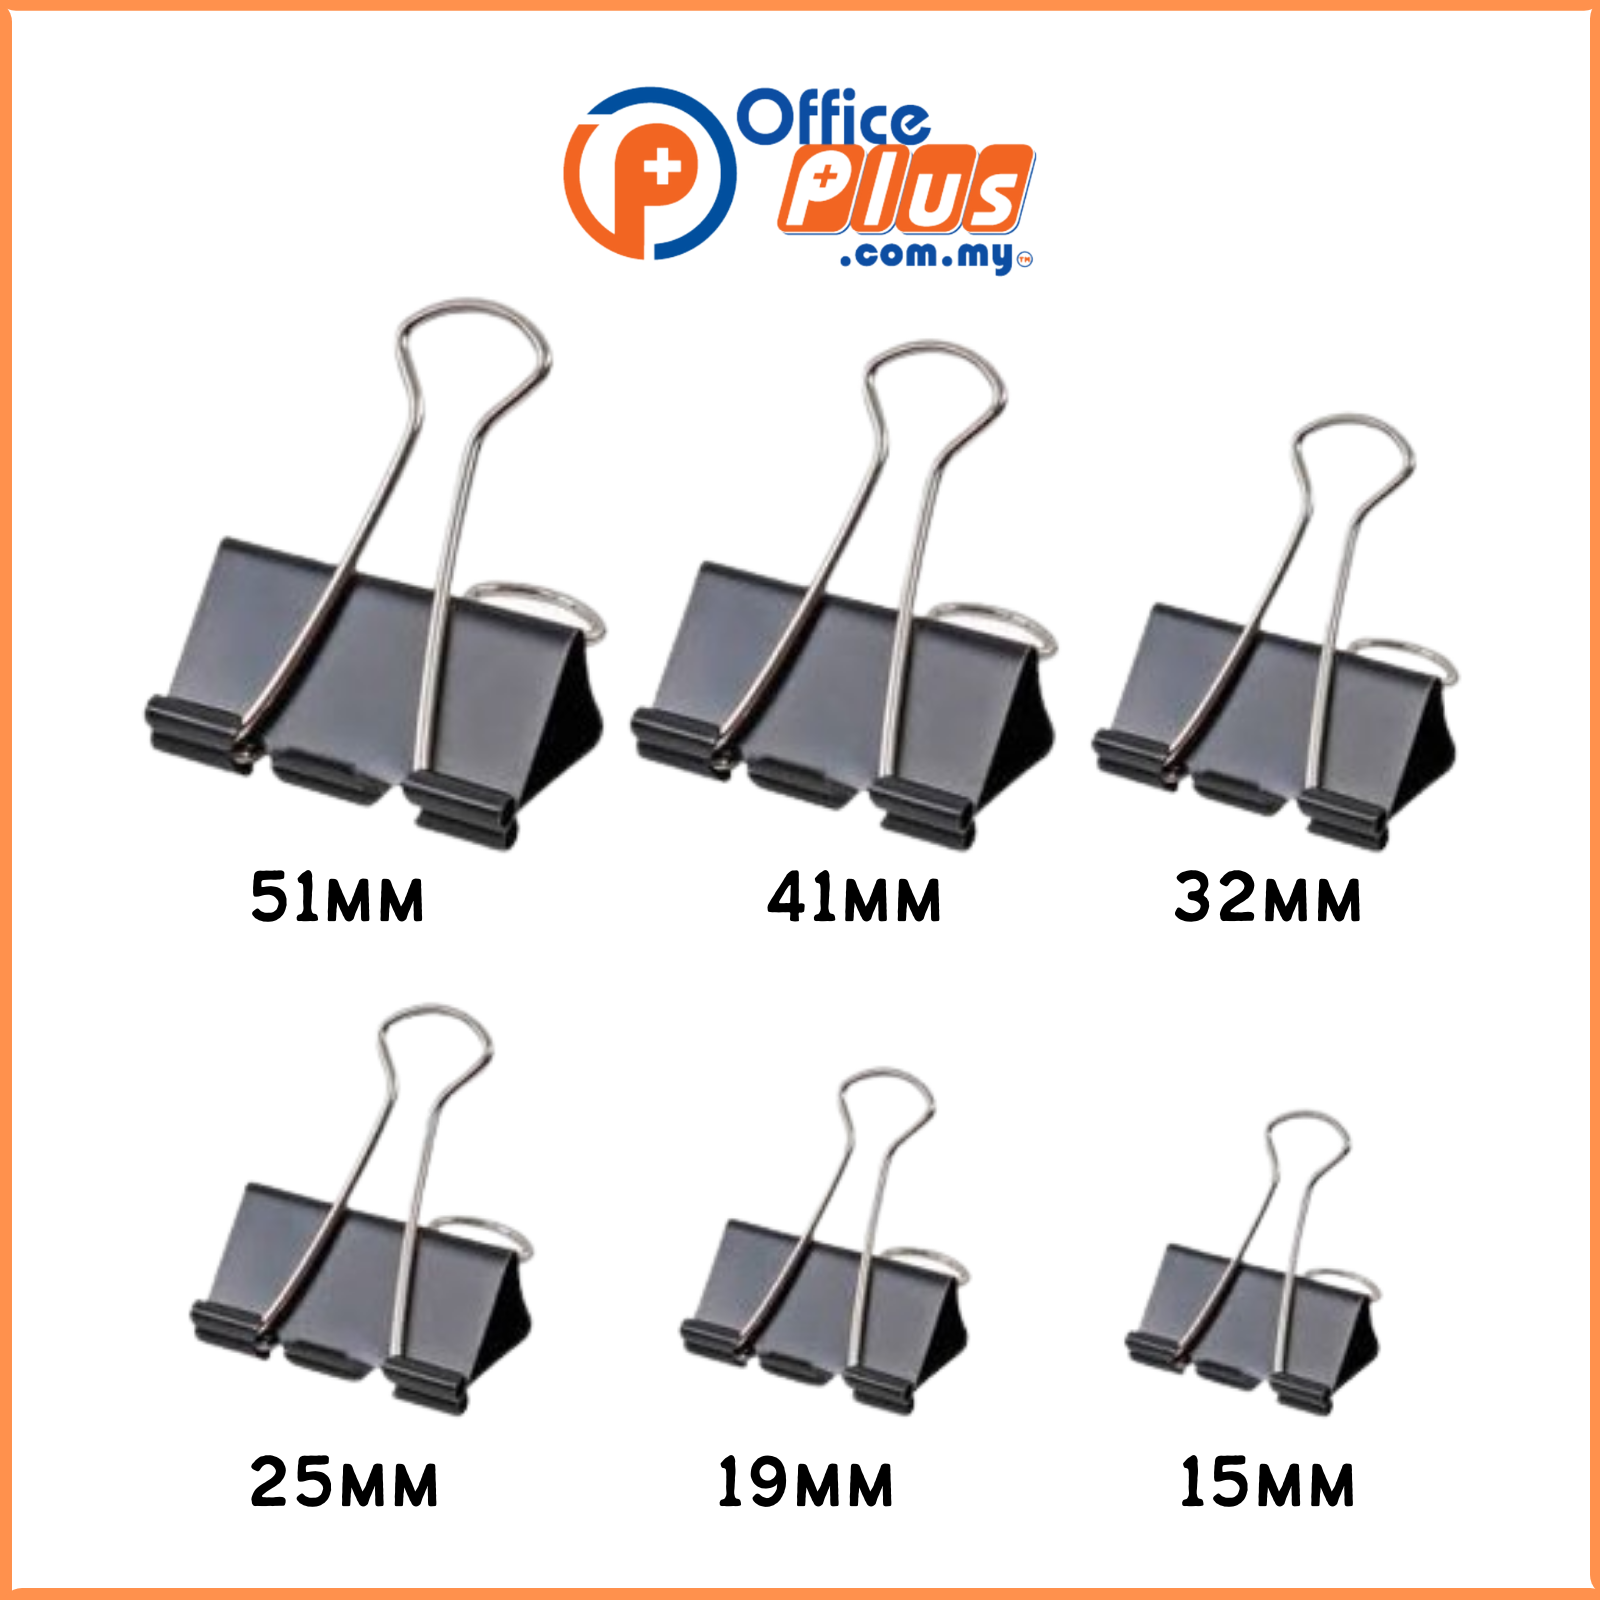 binder clips sizes